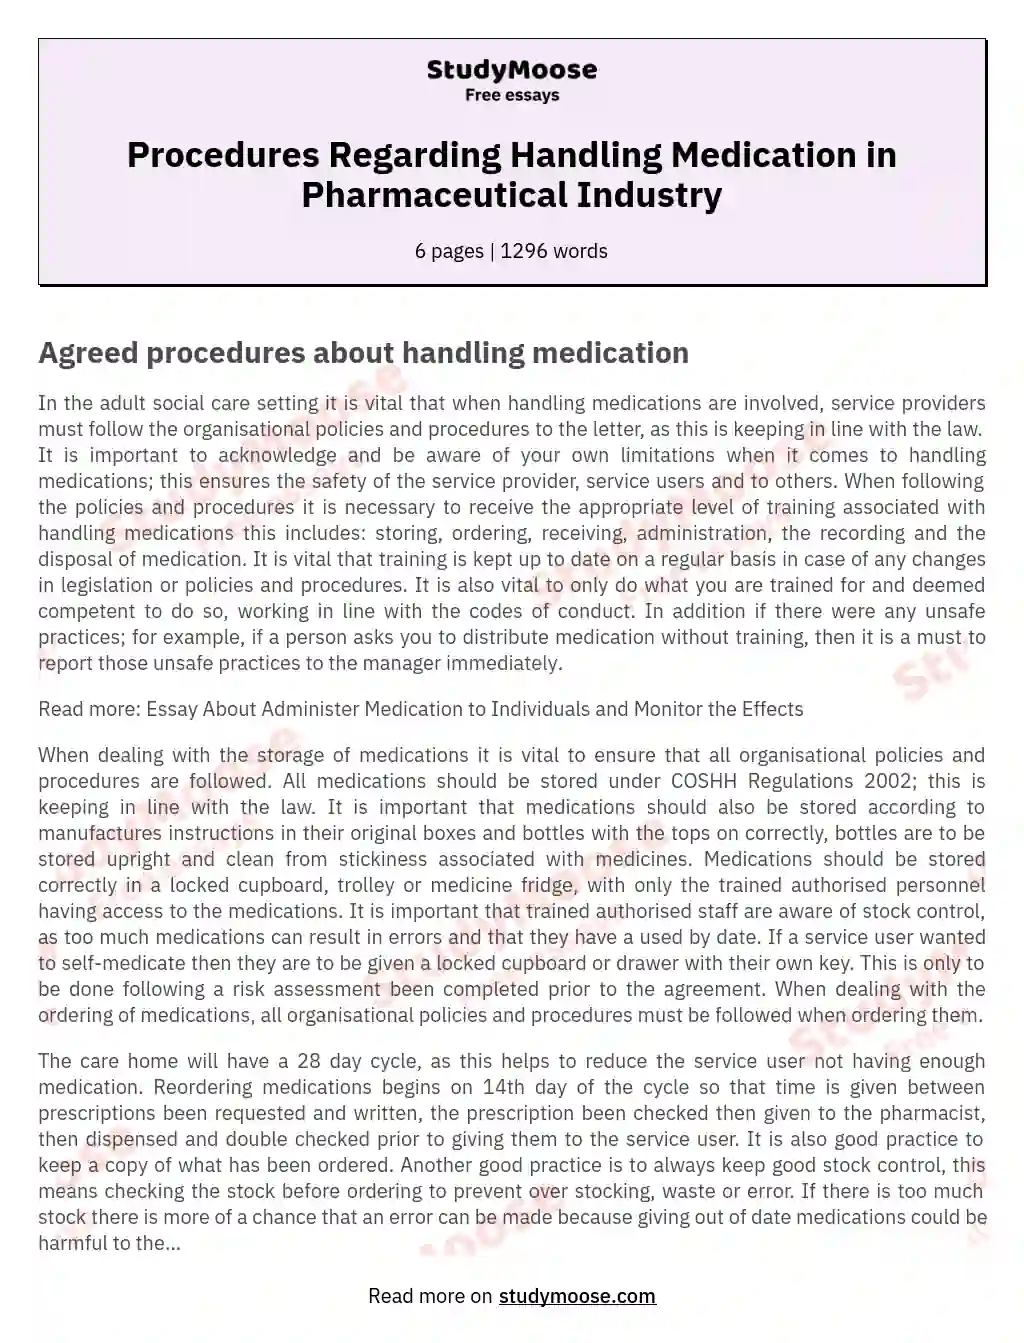 Procedures Regarding Handling Medication in Pharmaceutical Industry essay